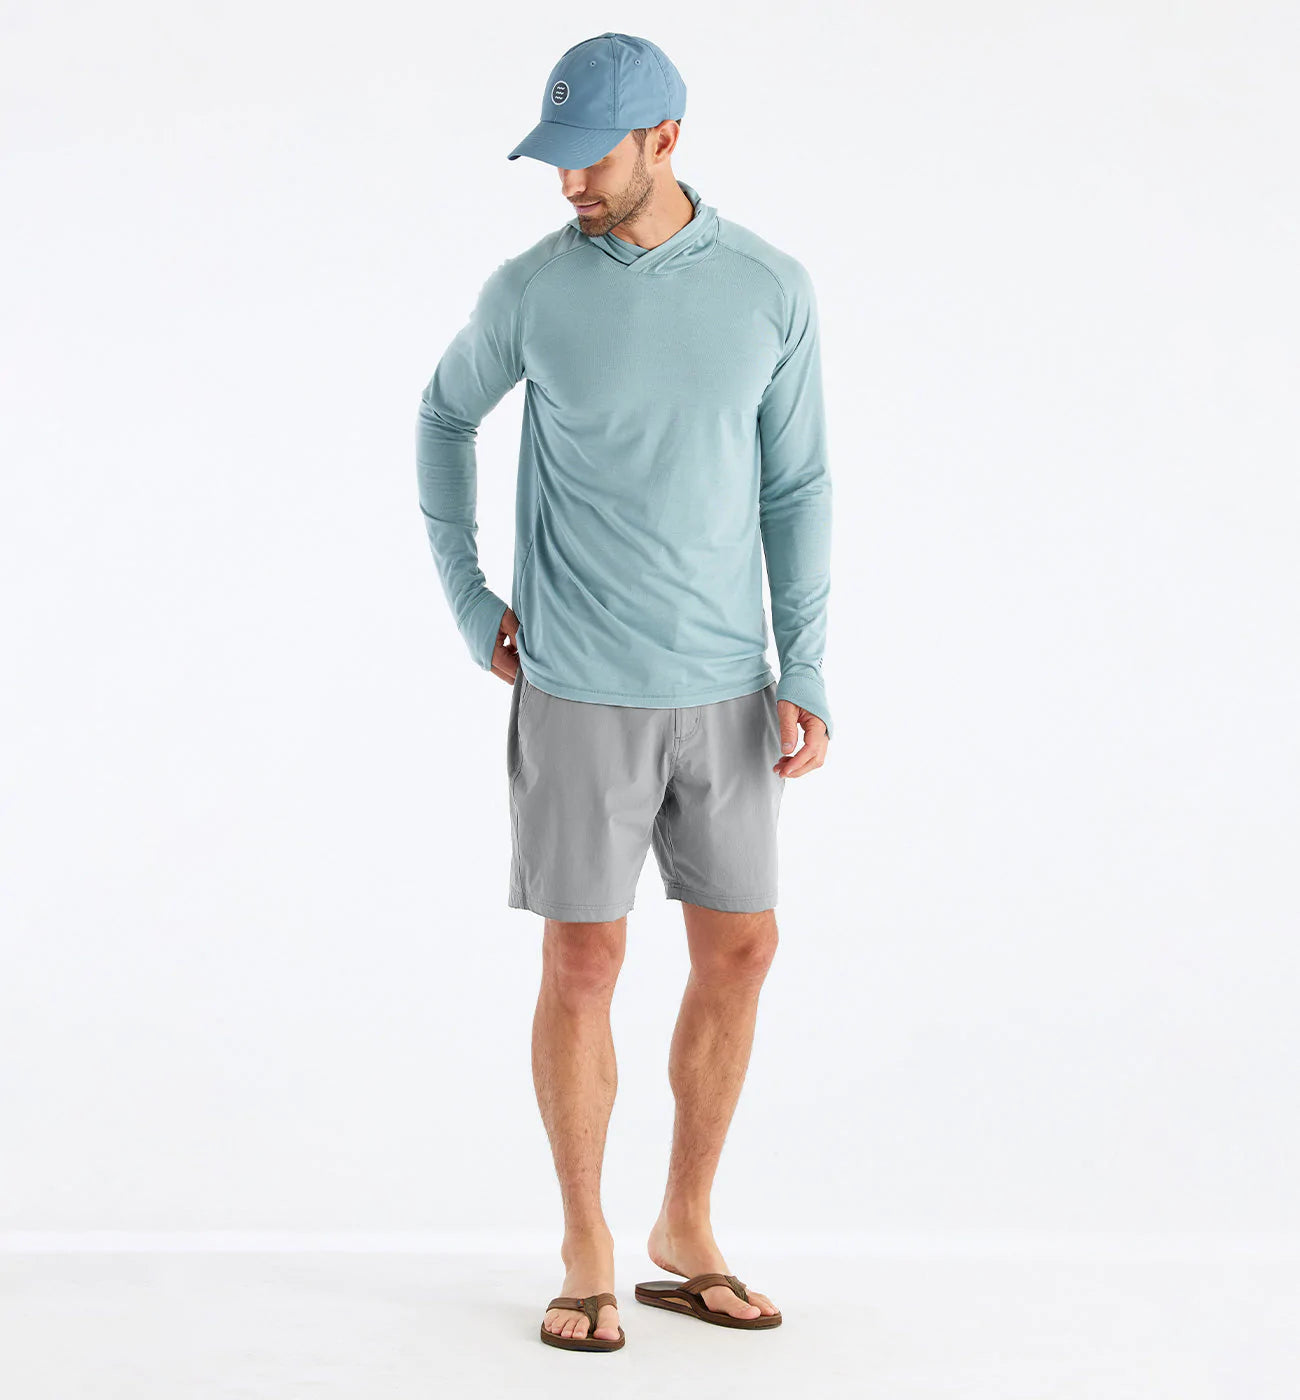 Glacier Bay Active Shorts for Men